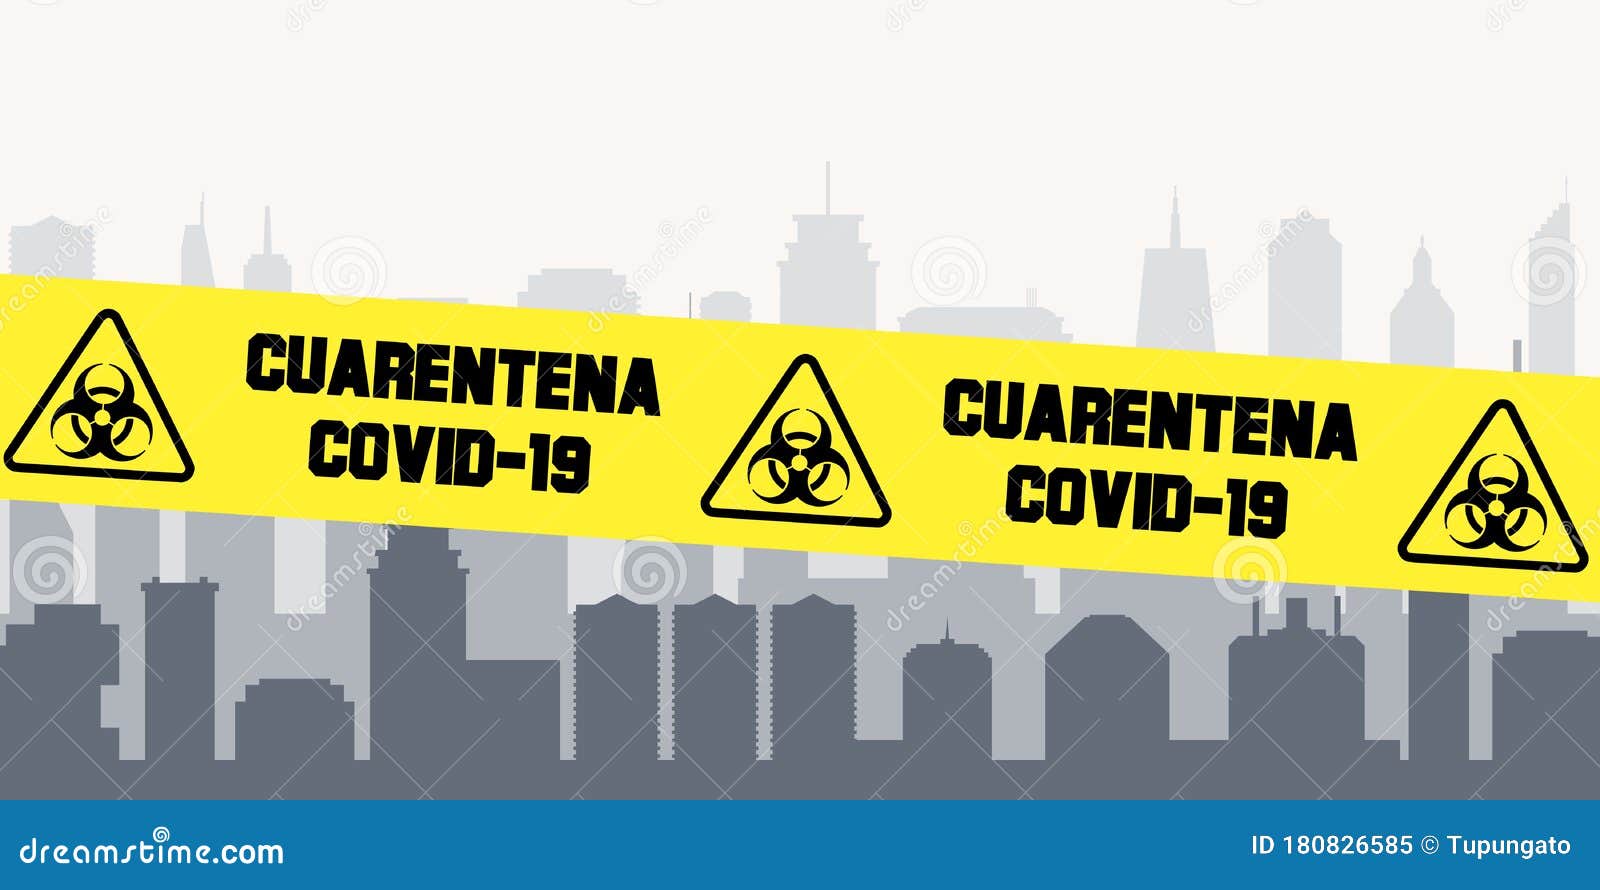 spanish covid-19 quarantine